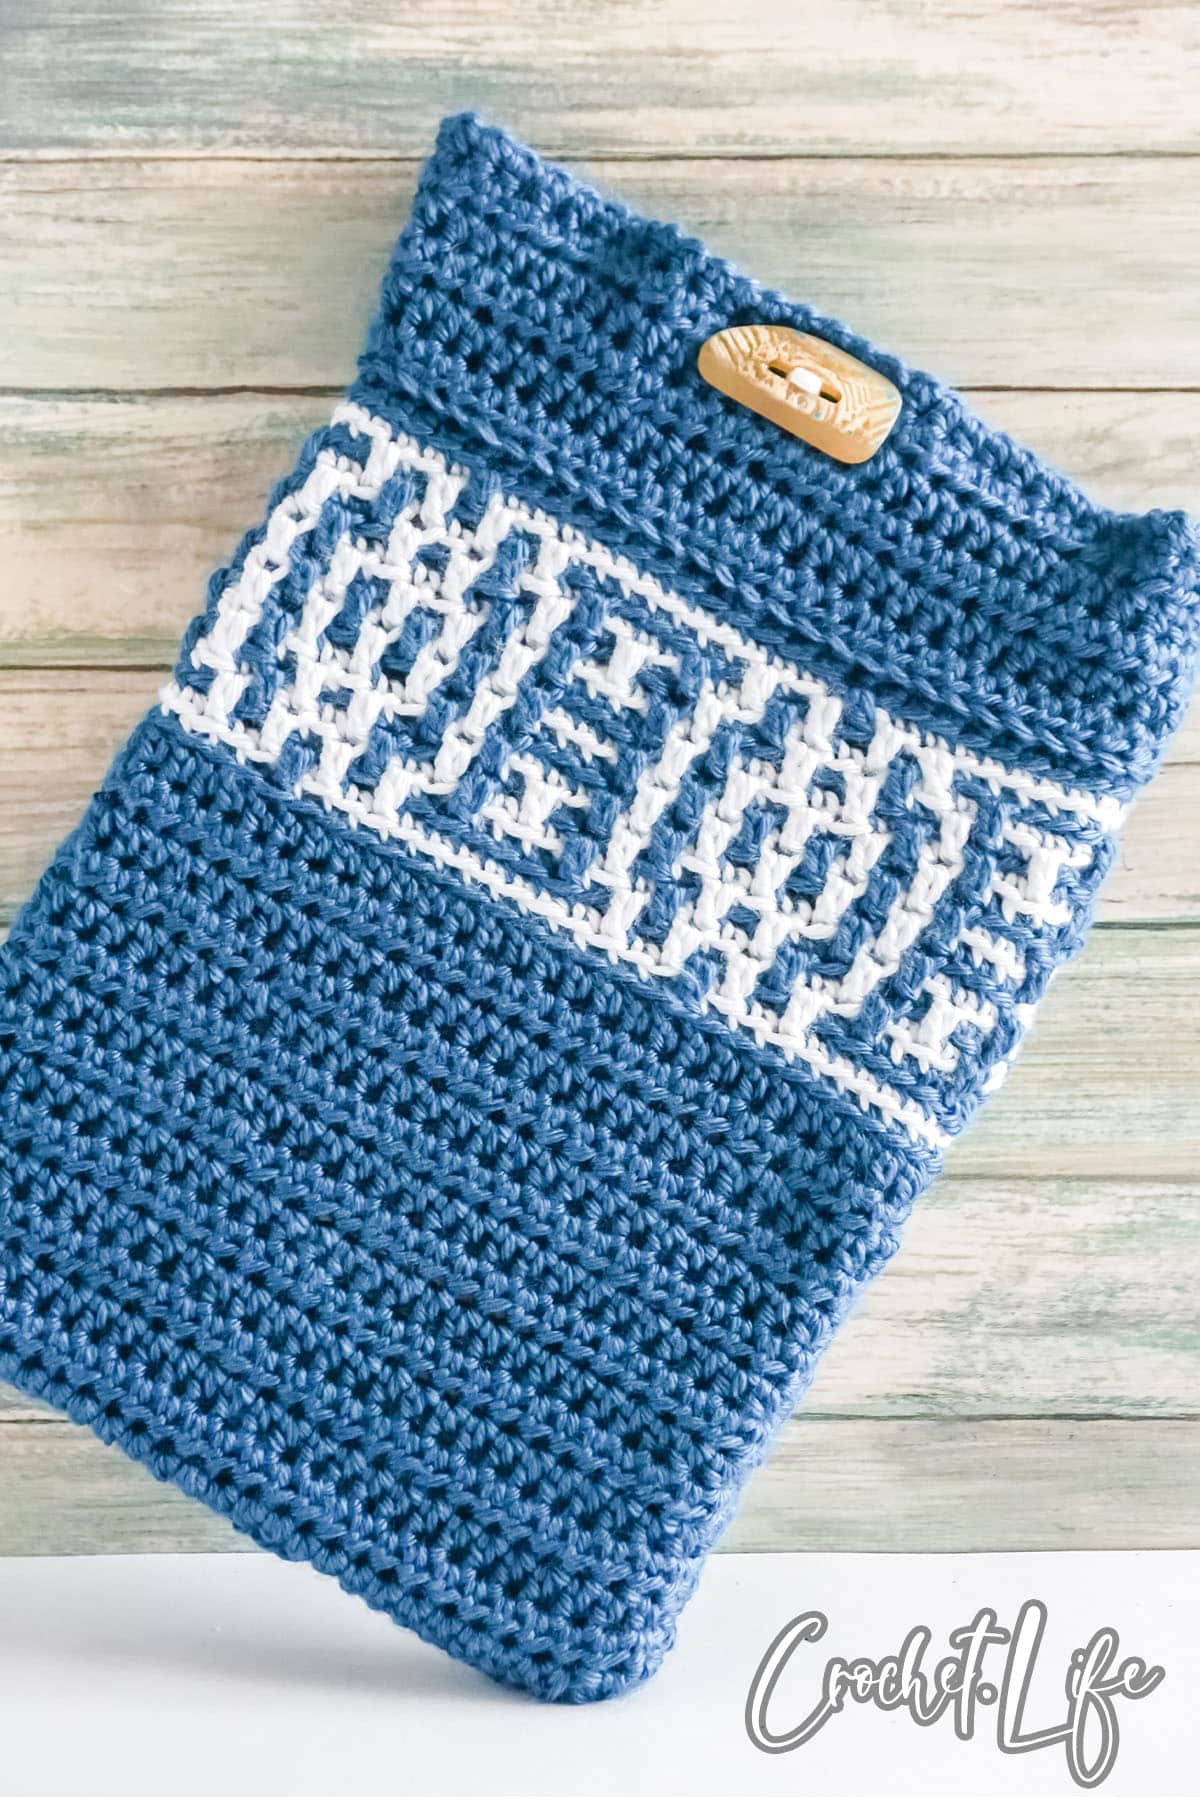 ipad cozy free crochet pattern